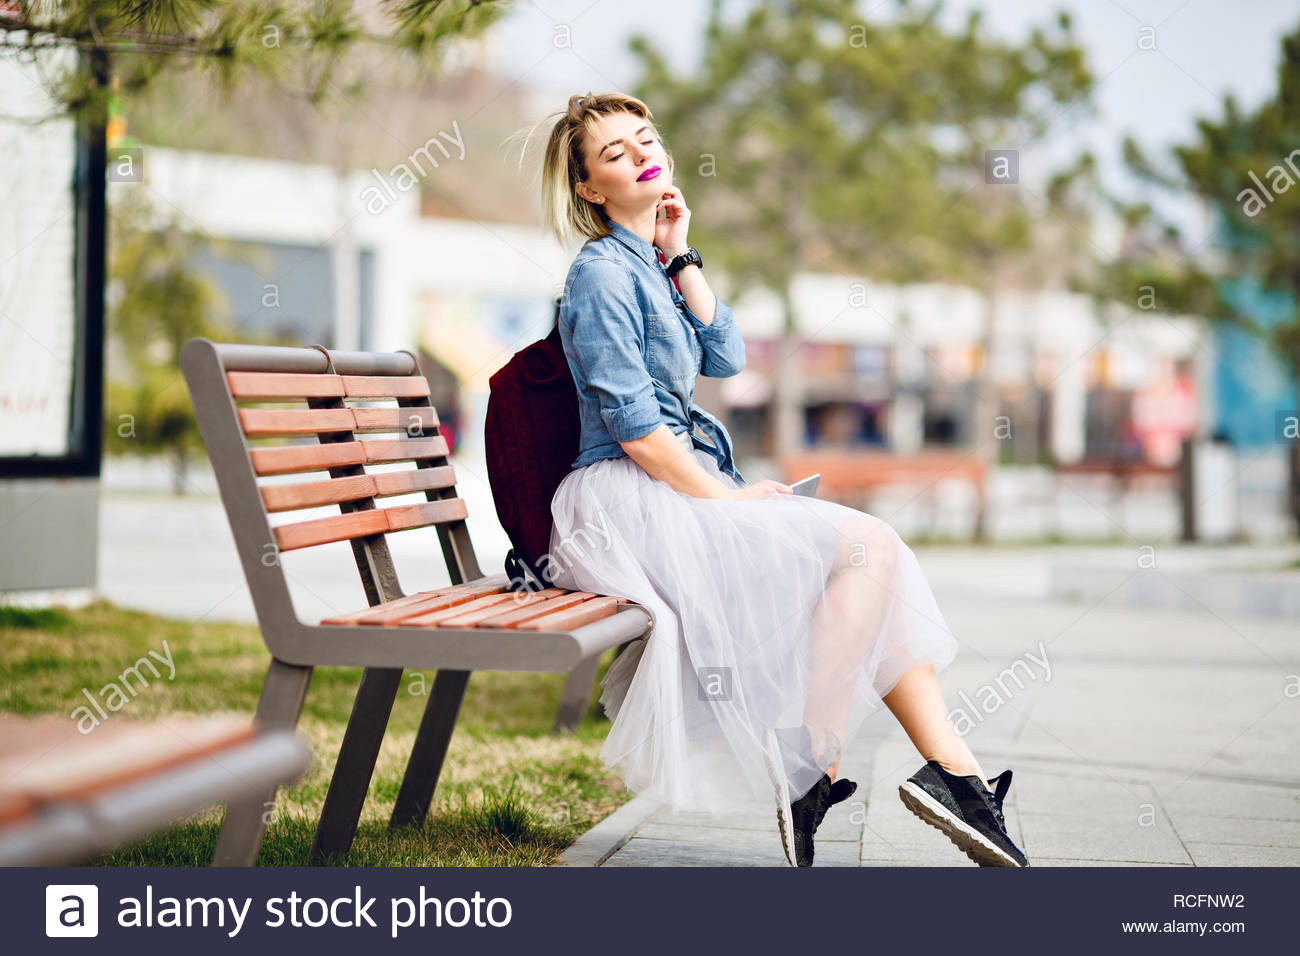 Sitting in short skirts